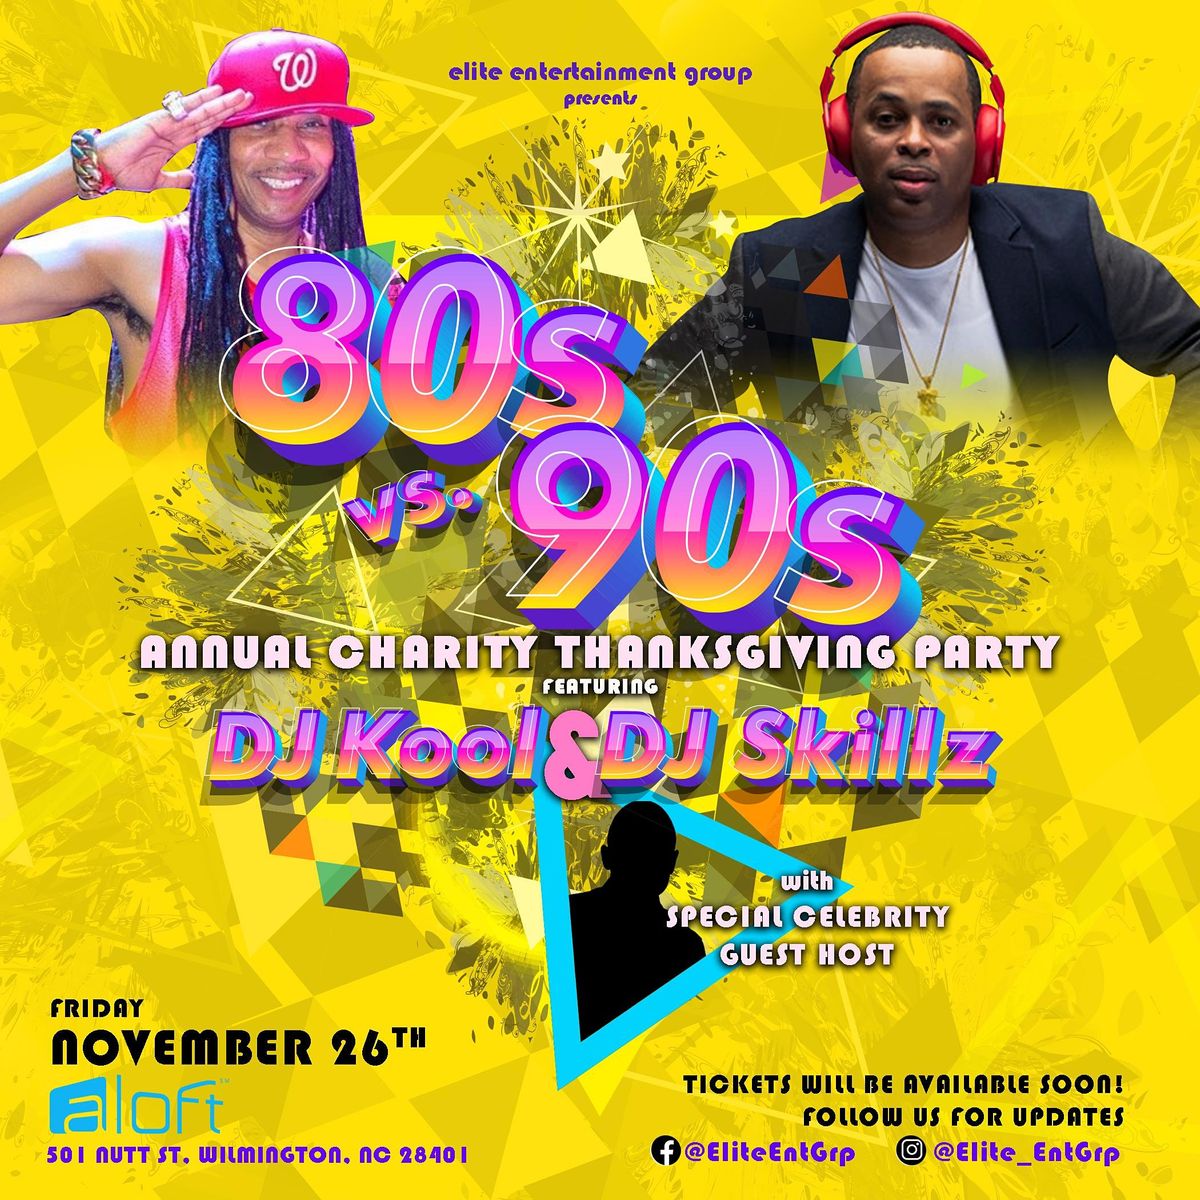 80s vs 90s Annual Charity Thanksgiving Party featuring DJ Kool & DJ Skills